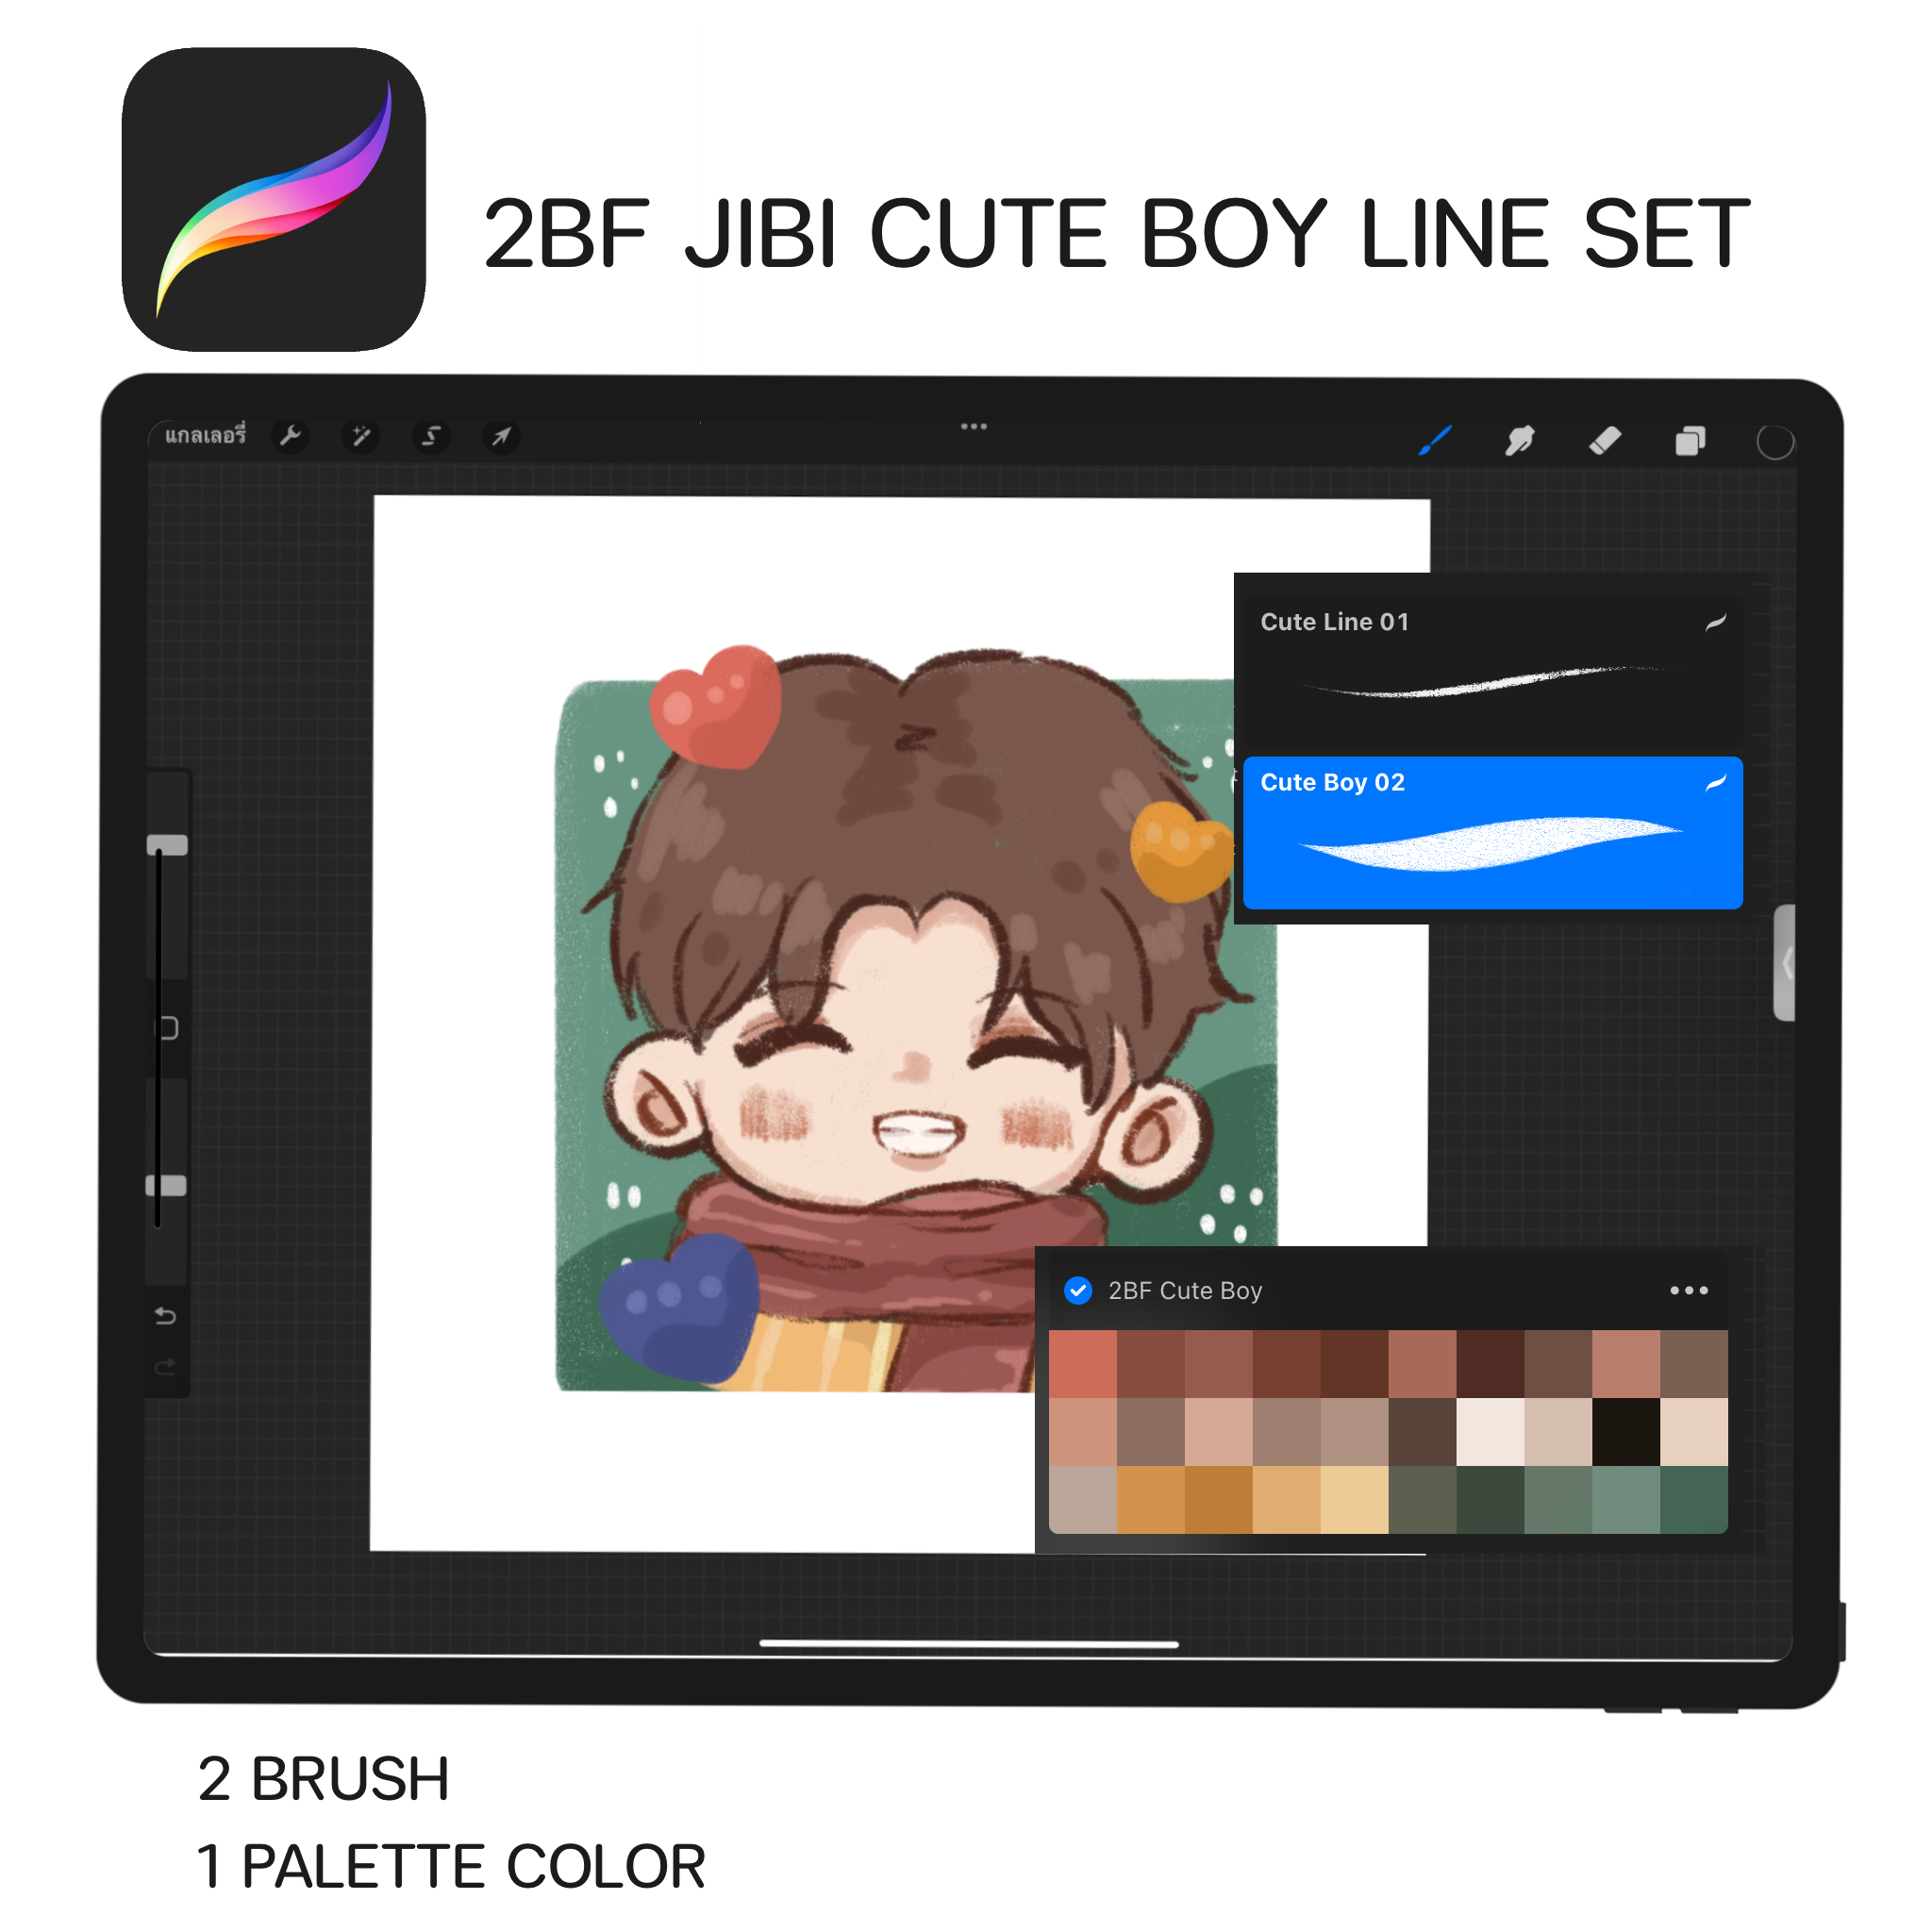 2BF JiBi cute Boy Line Set